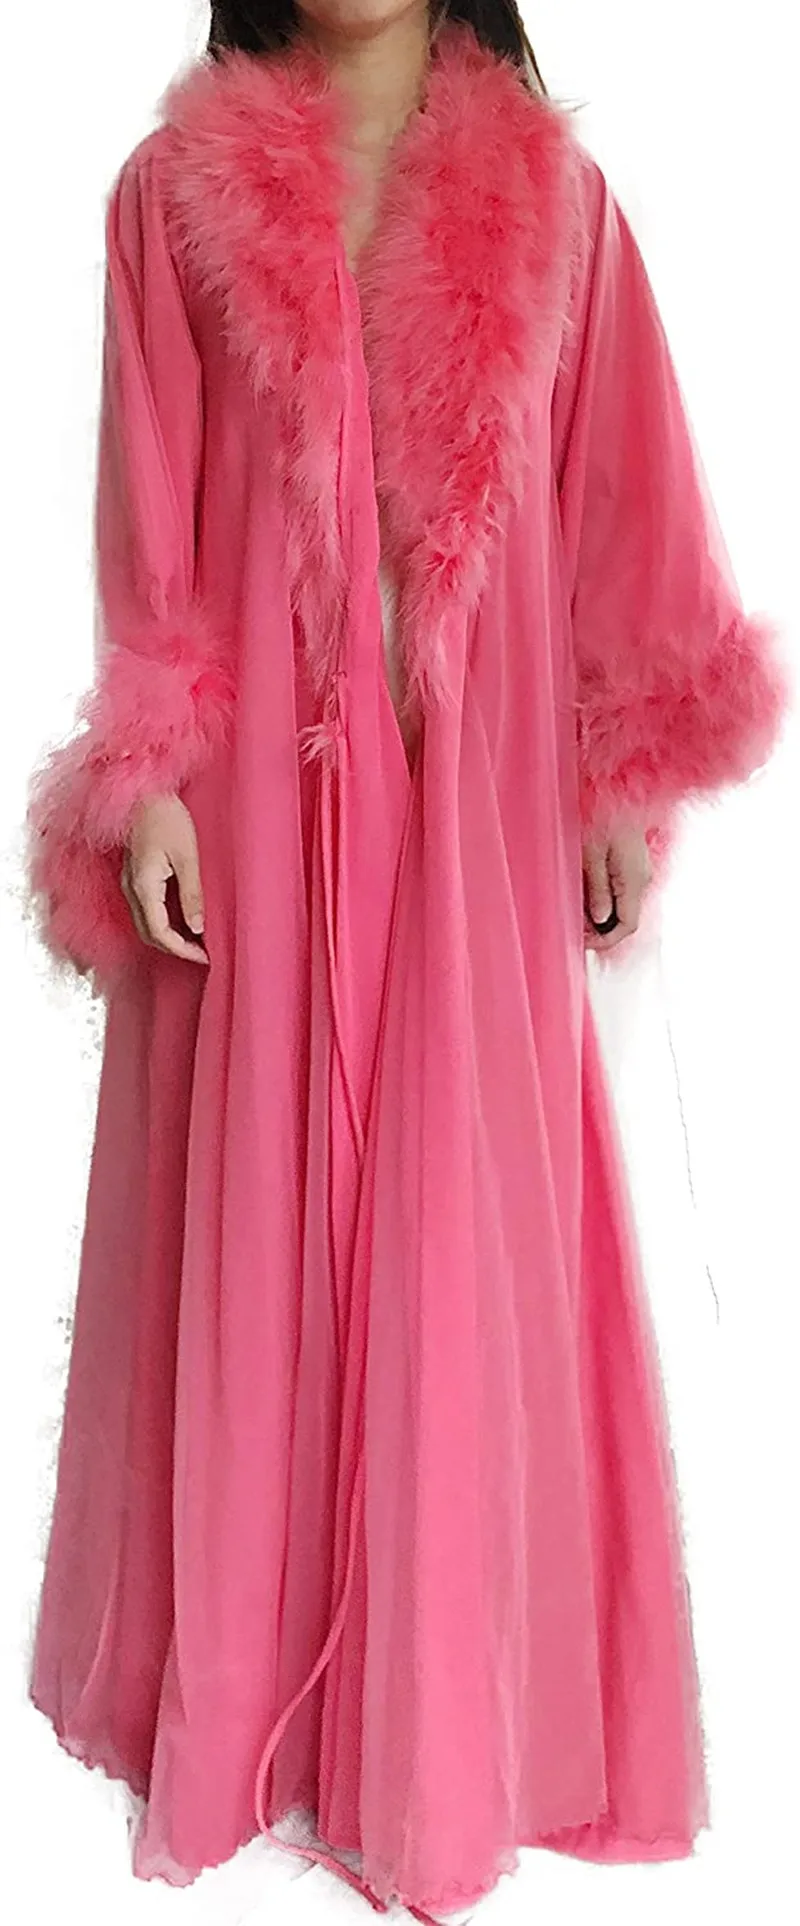 Chic Feather Evening Dresses Women's Sexy Robes Illusion Fur Trim Boudoir Robe Nightgown Bathrobe Bridal Lingerie Custom Made